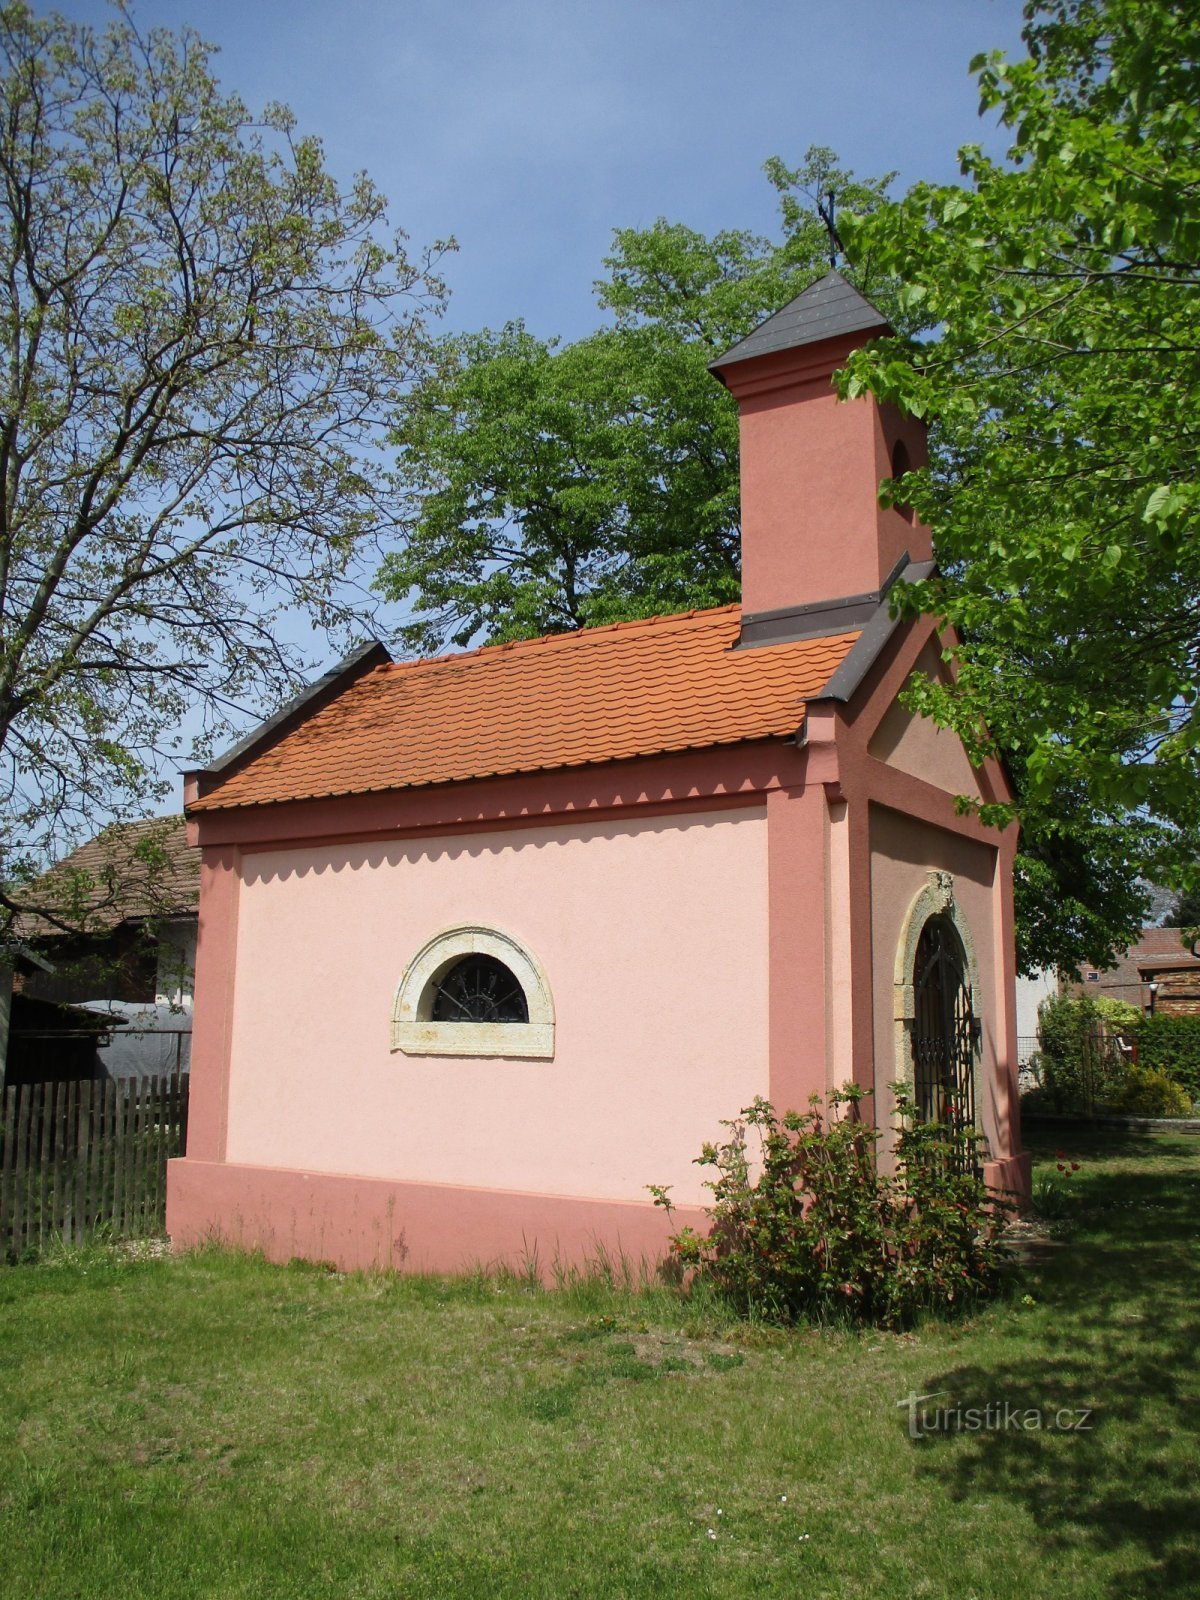 Kappeli (Kunčice, 8.5.2020)